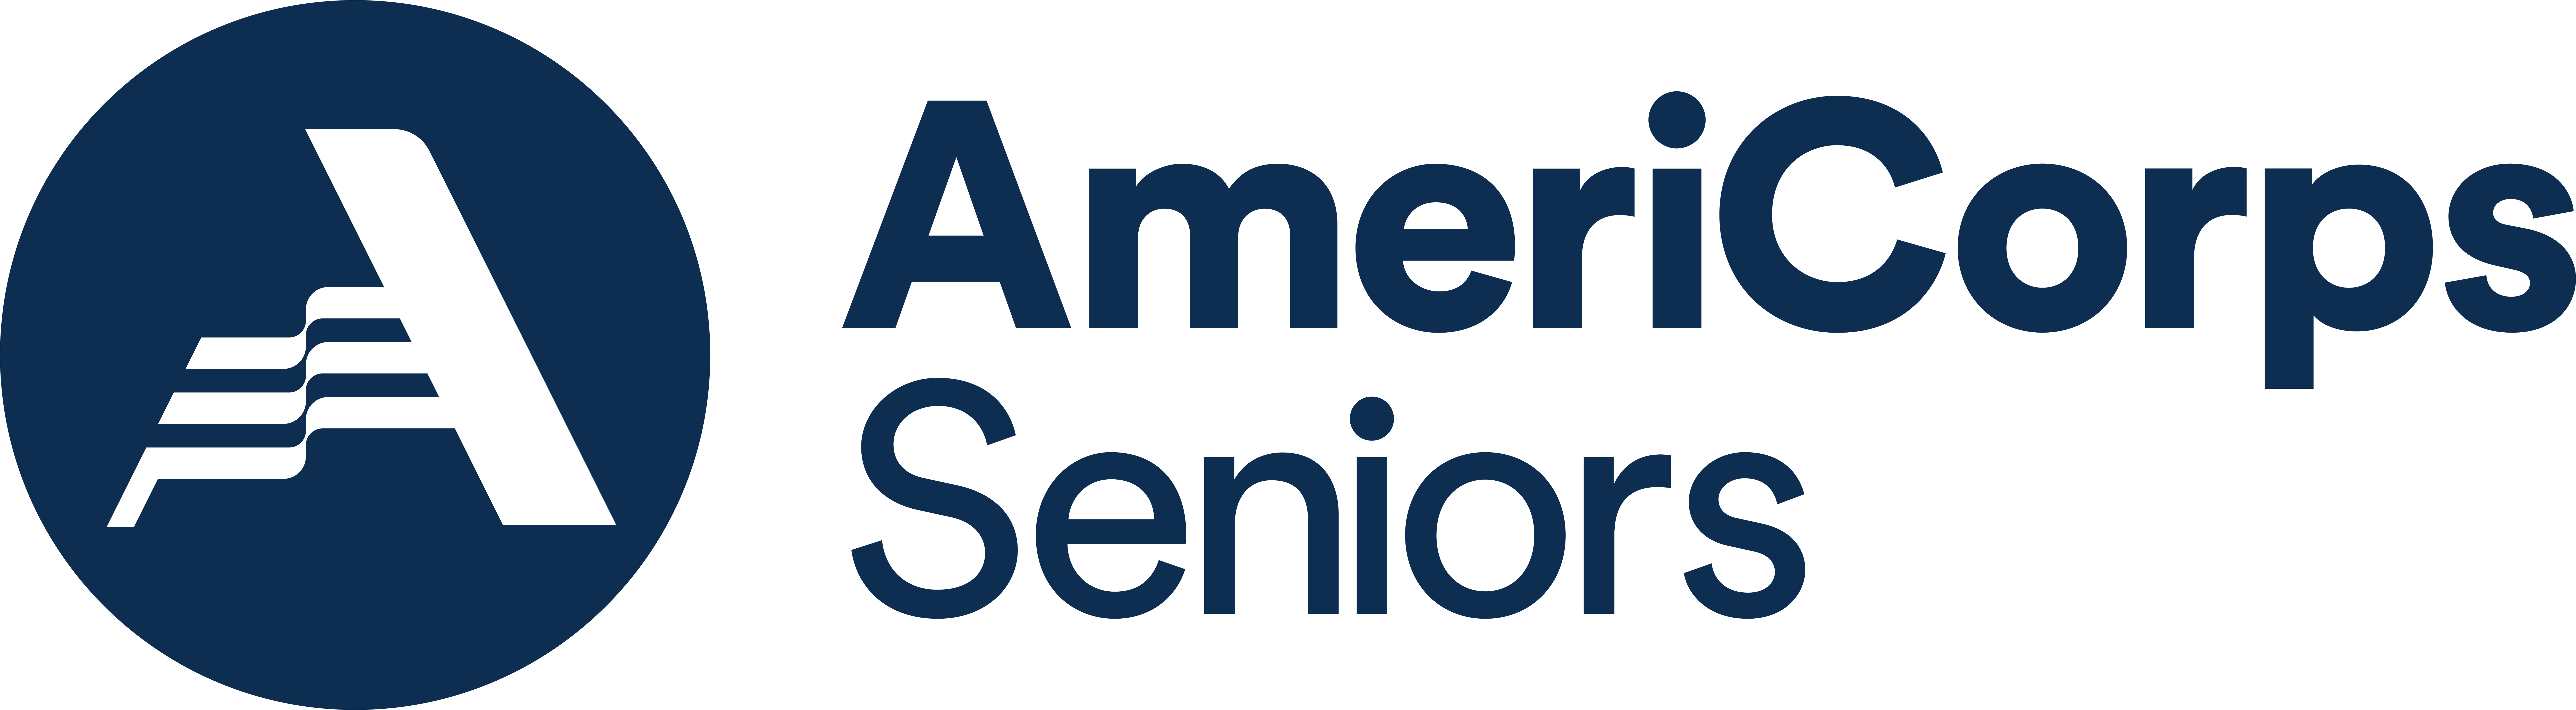 Americorps-Seniors_Main-logo_Navy